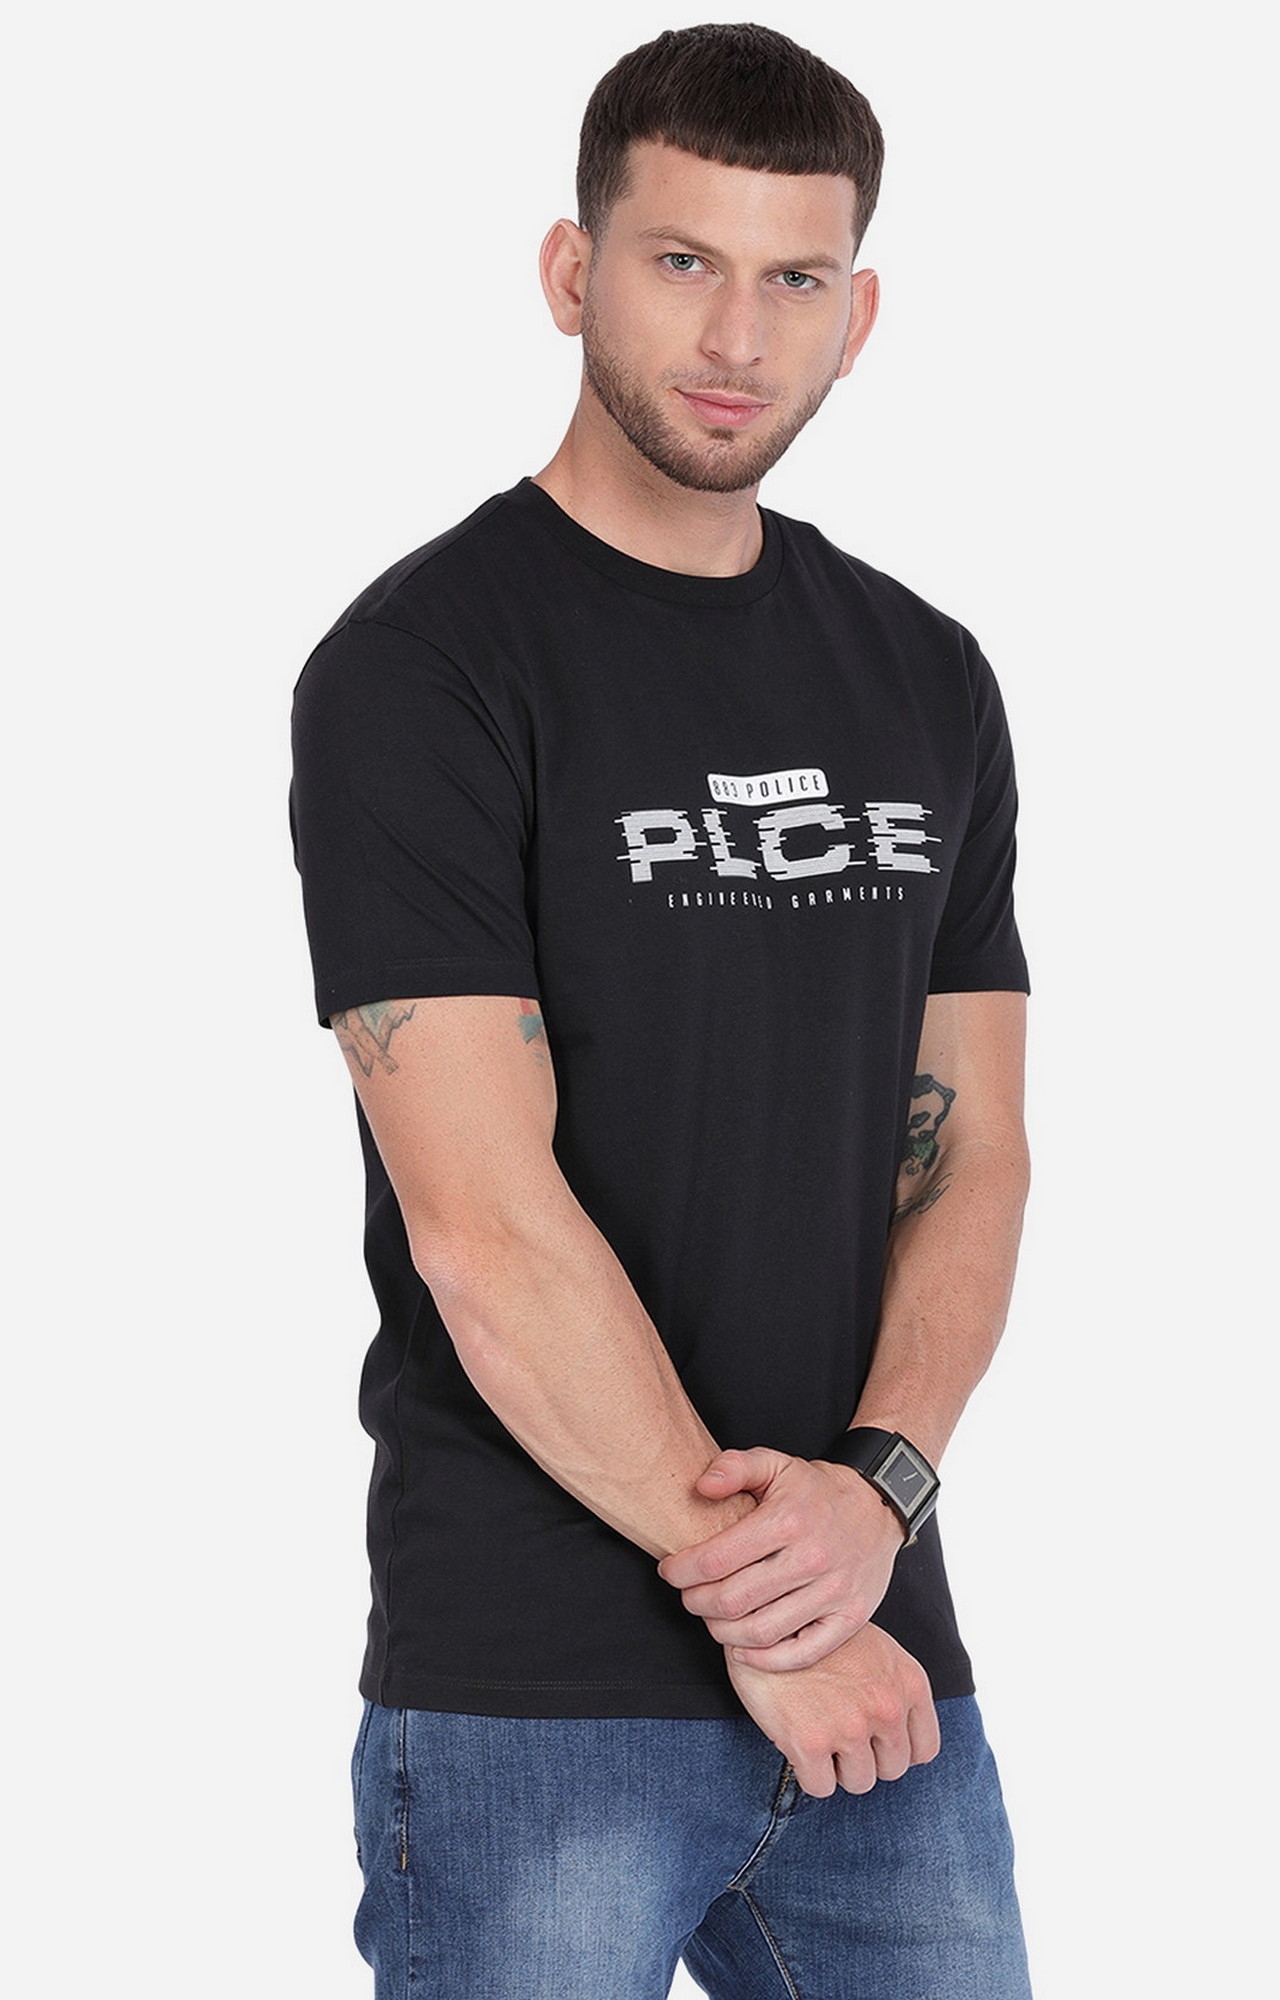 883 Police | Men's Black Cotton Typographic Printed T-Shirt 4